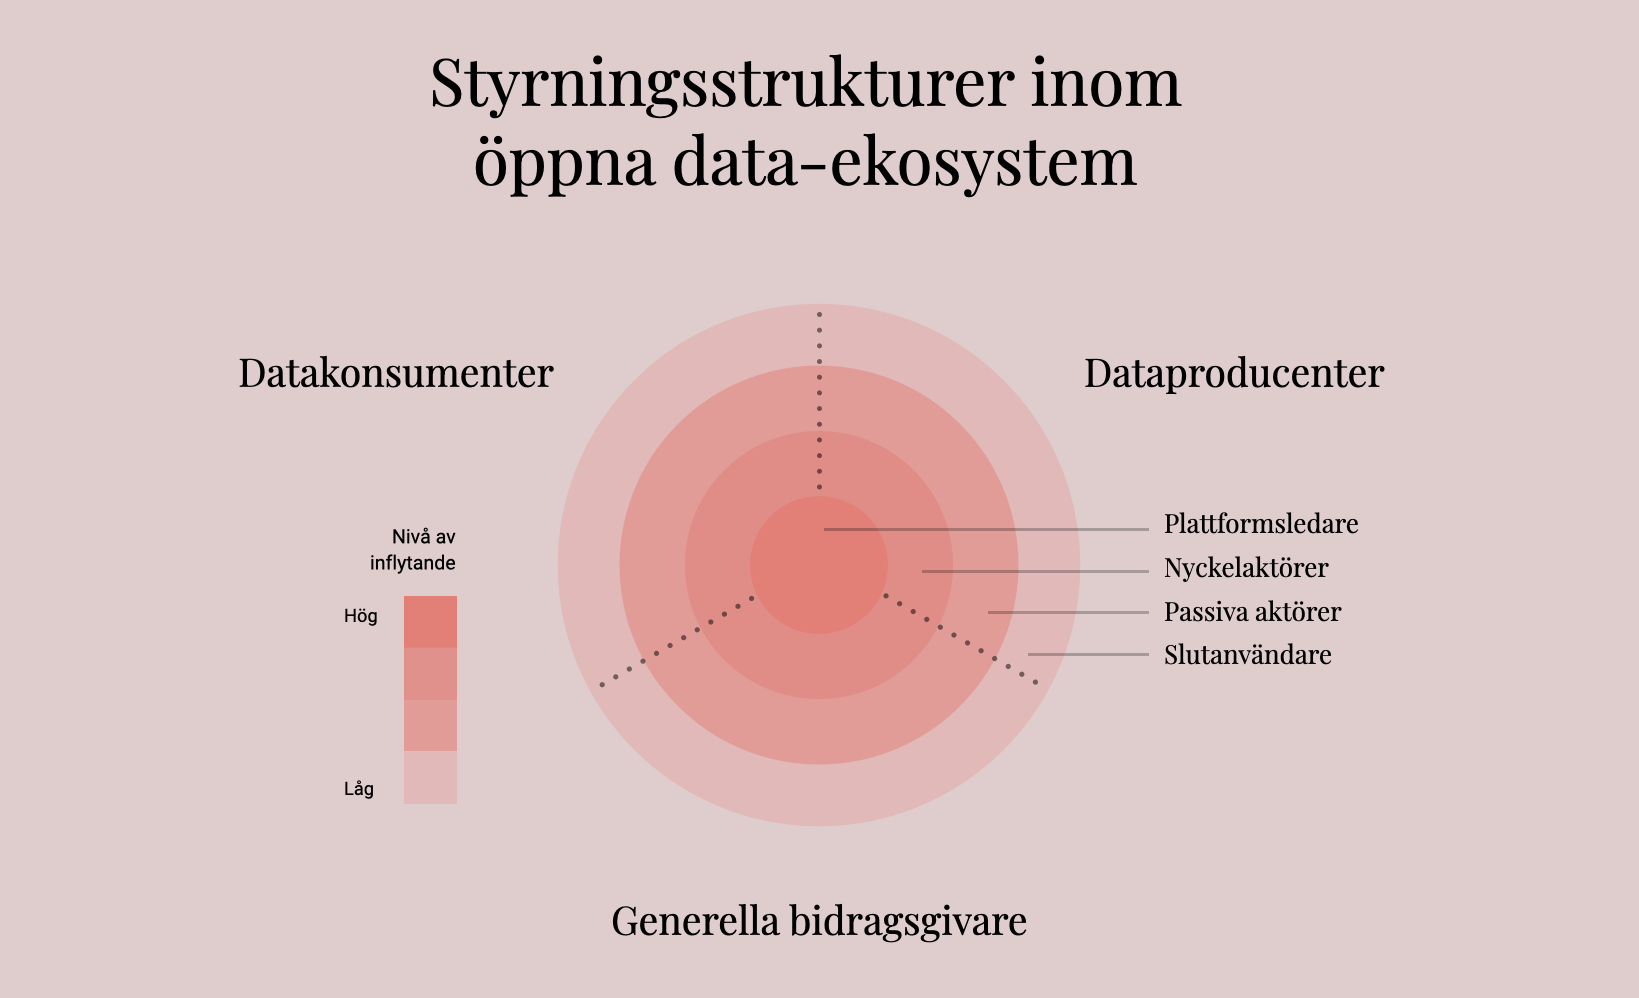 Styrningsstrukturer inom öppna data-ekosystem